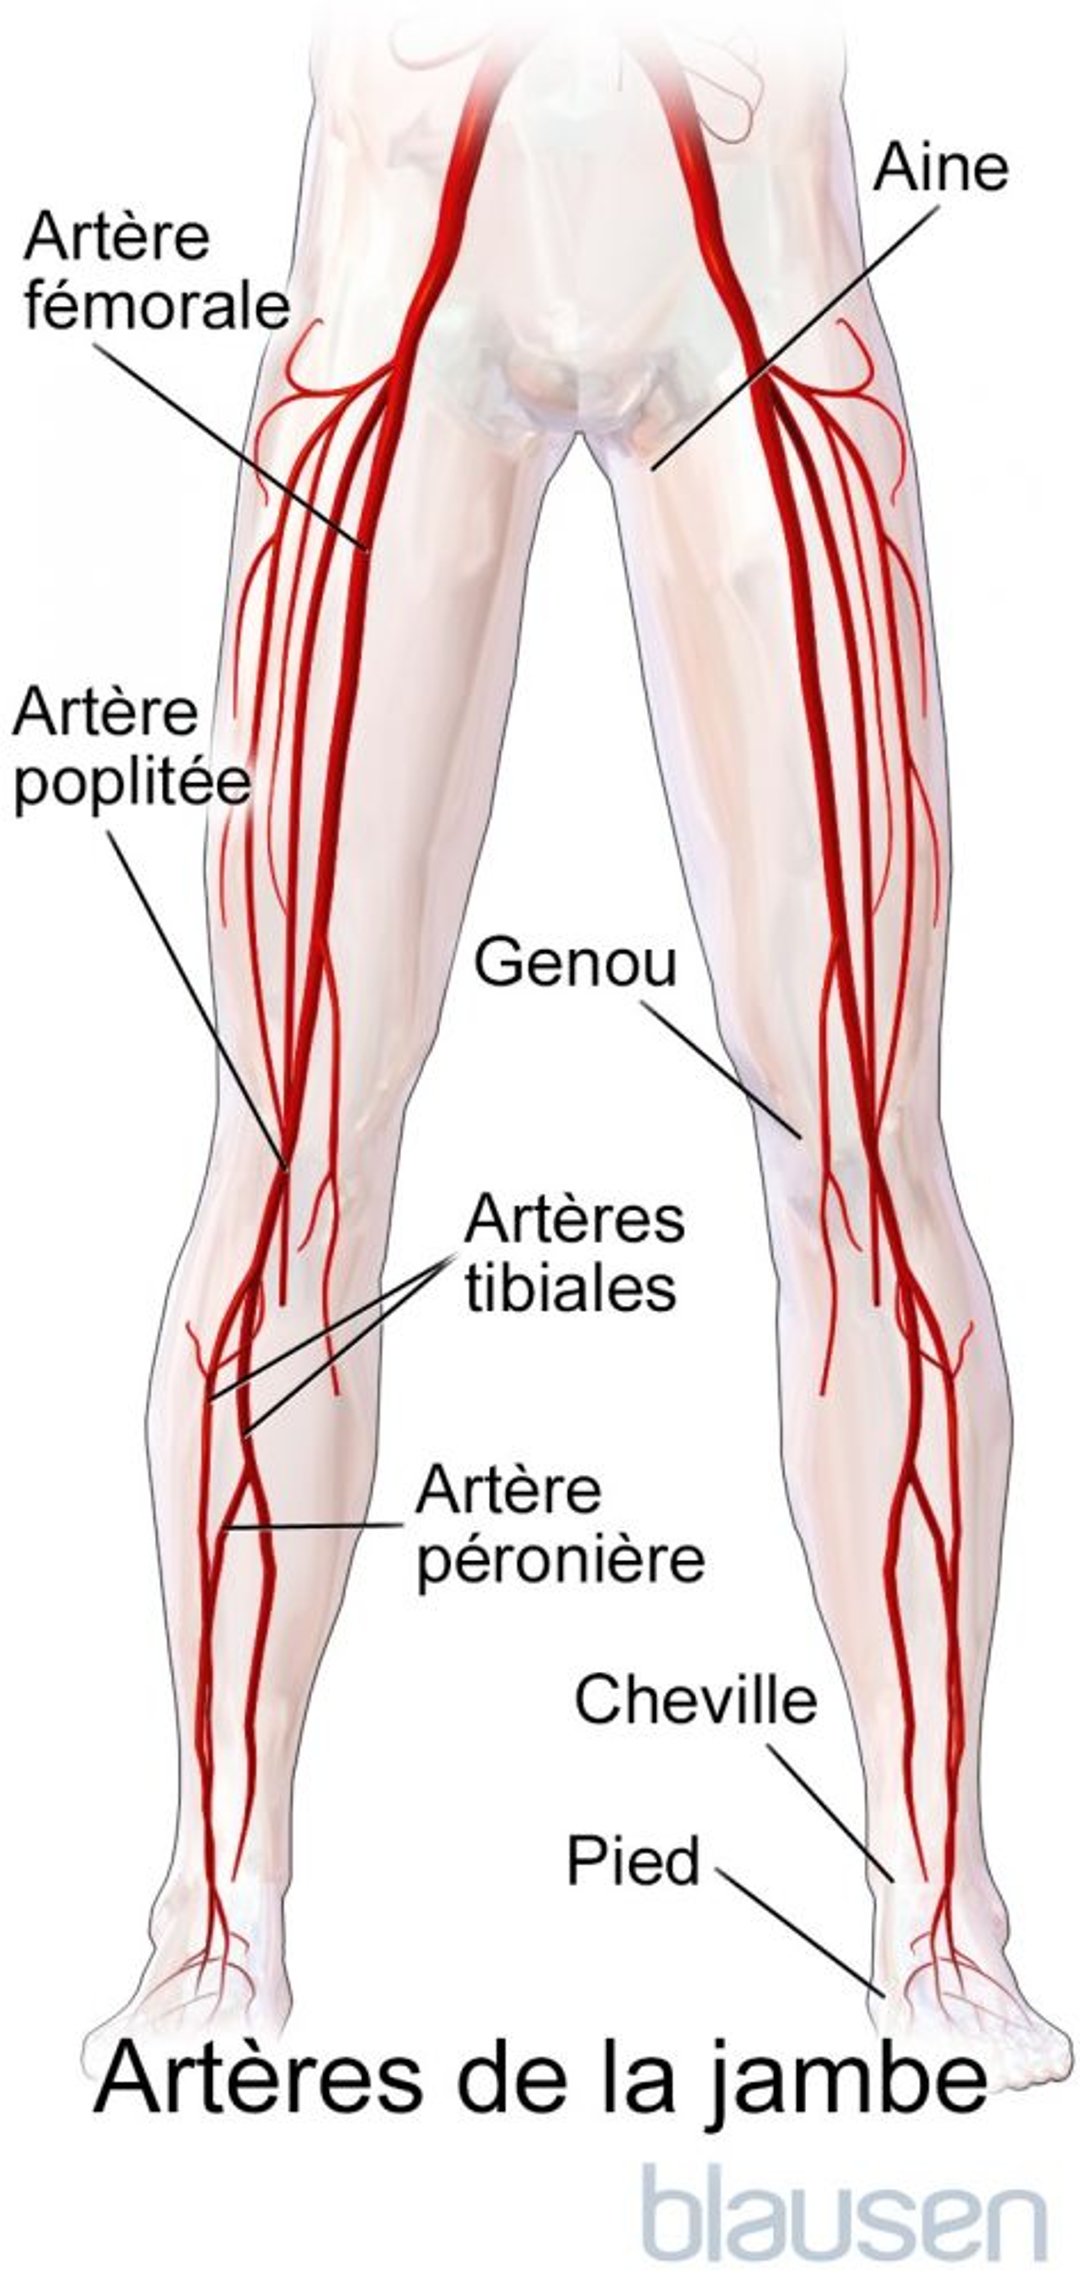 Artères de la jambe